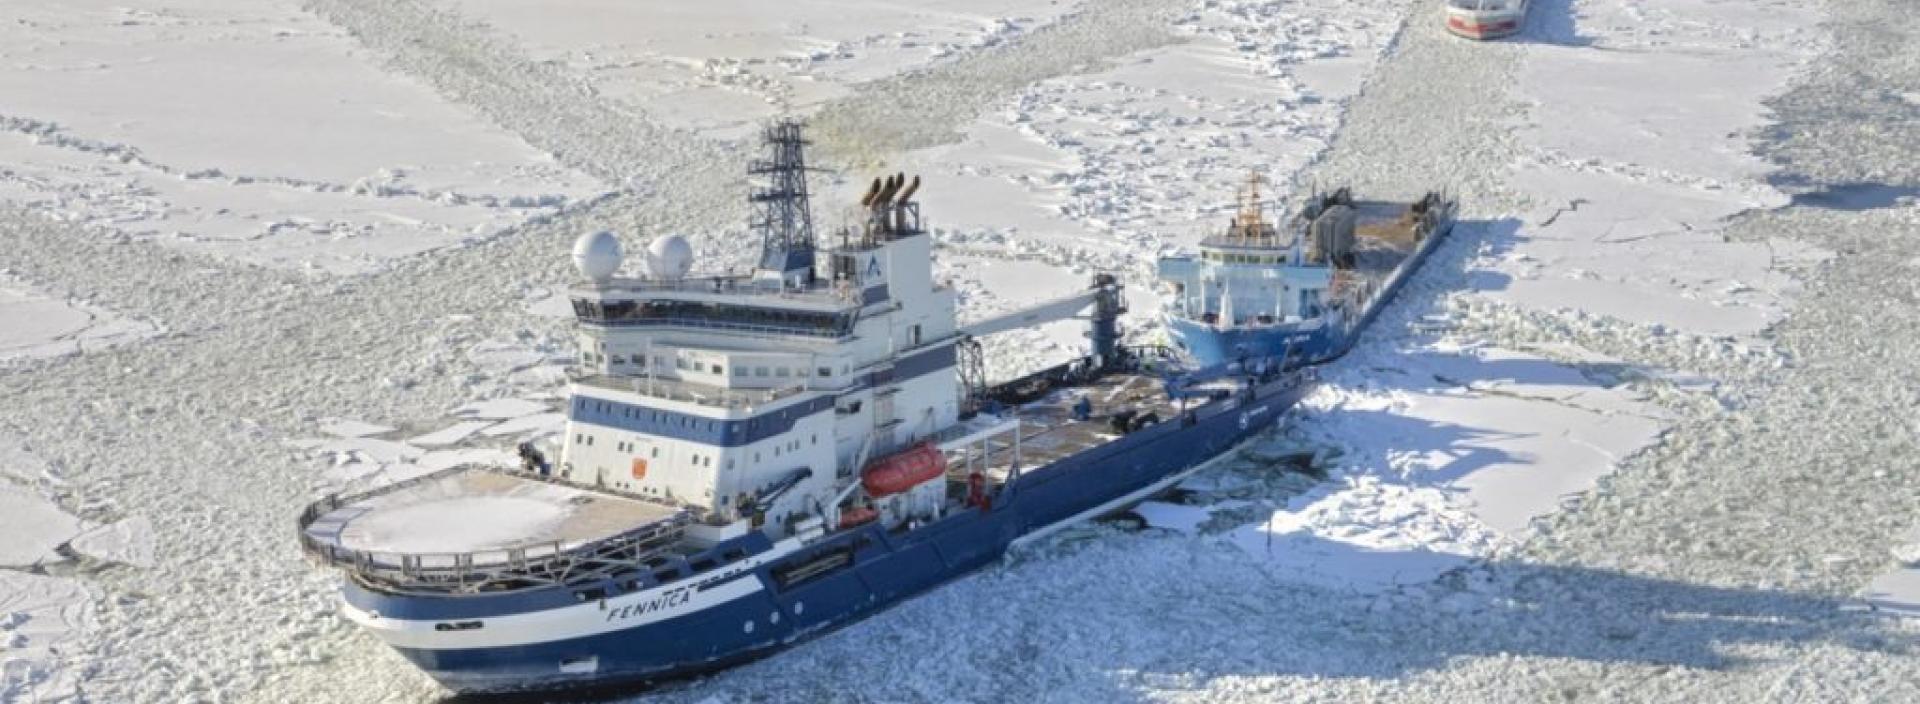 Port of HaminaKotka frontpage main image ice breaker